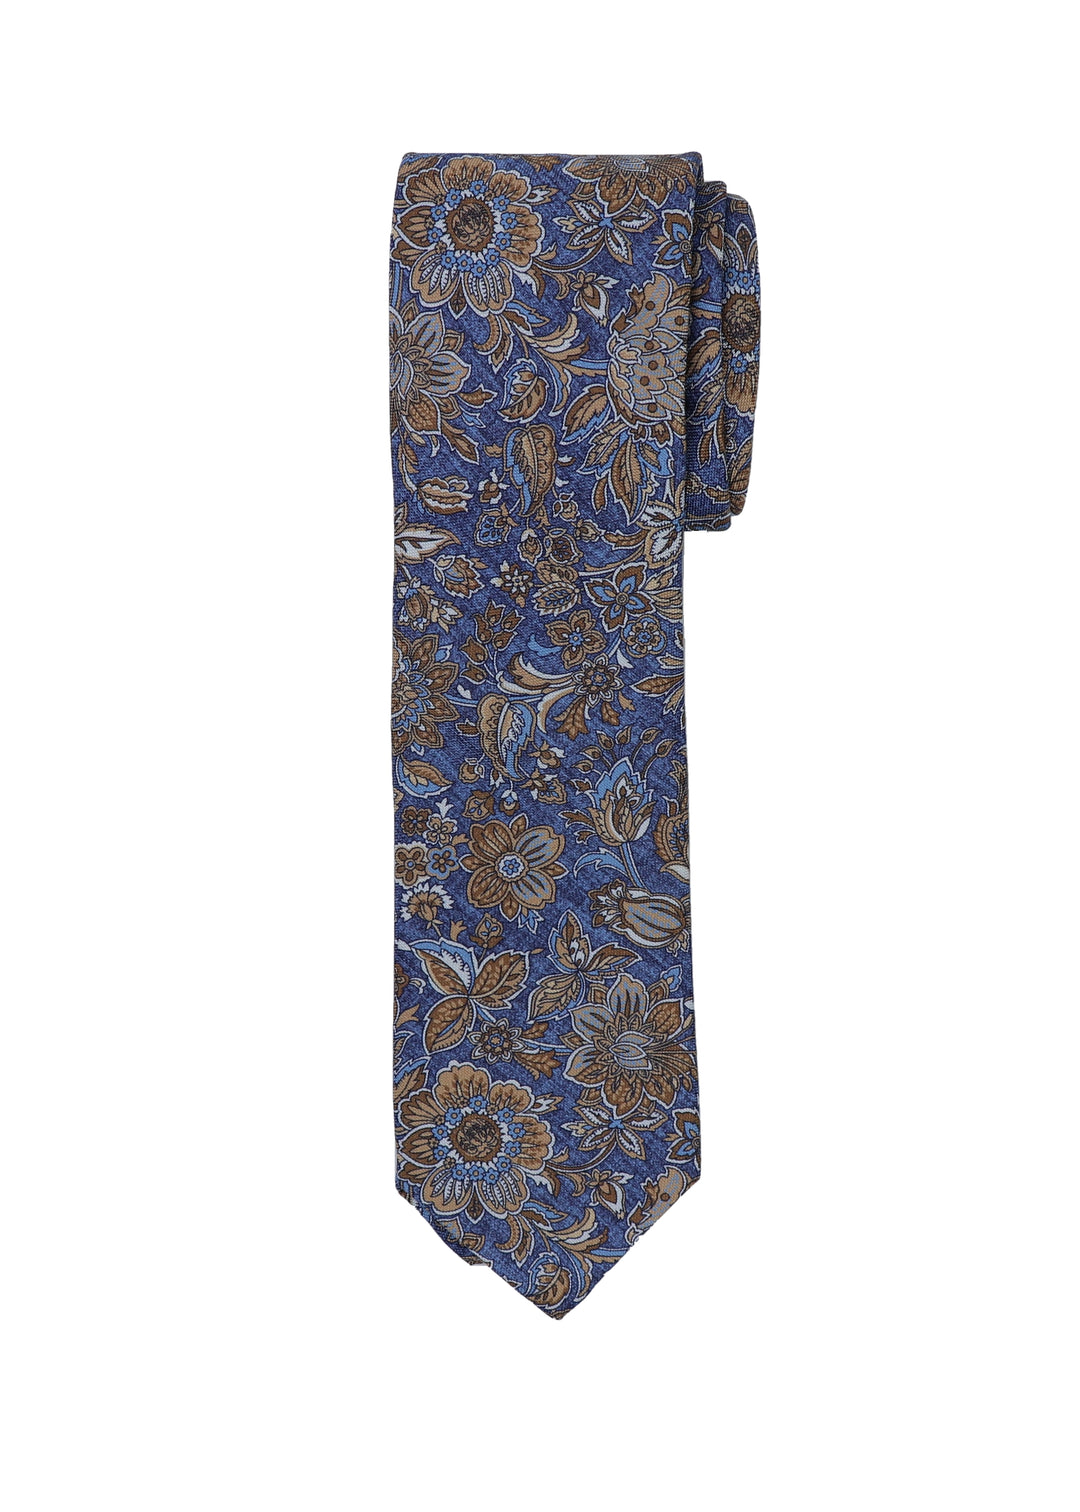 Large Floral Printed Necktie in Blue